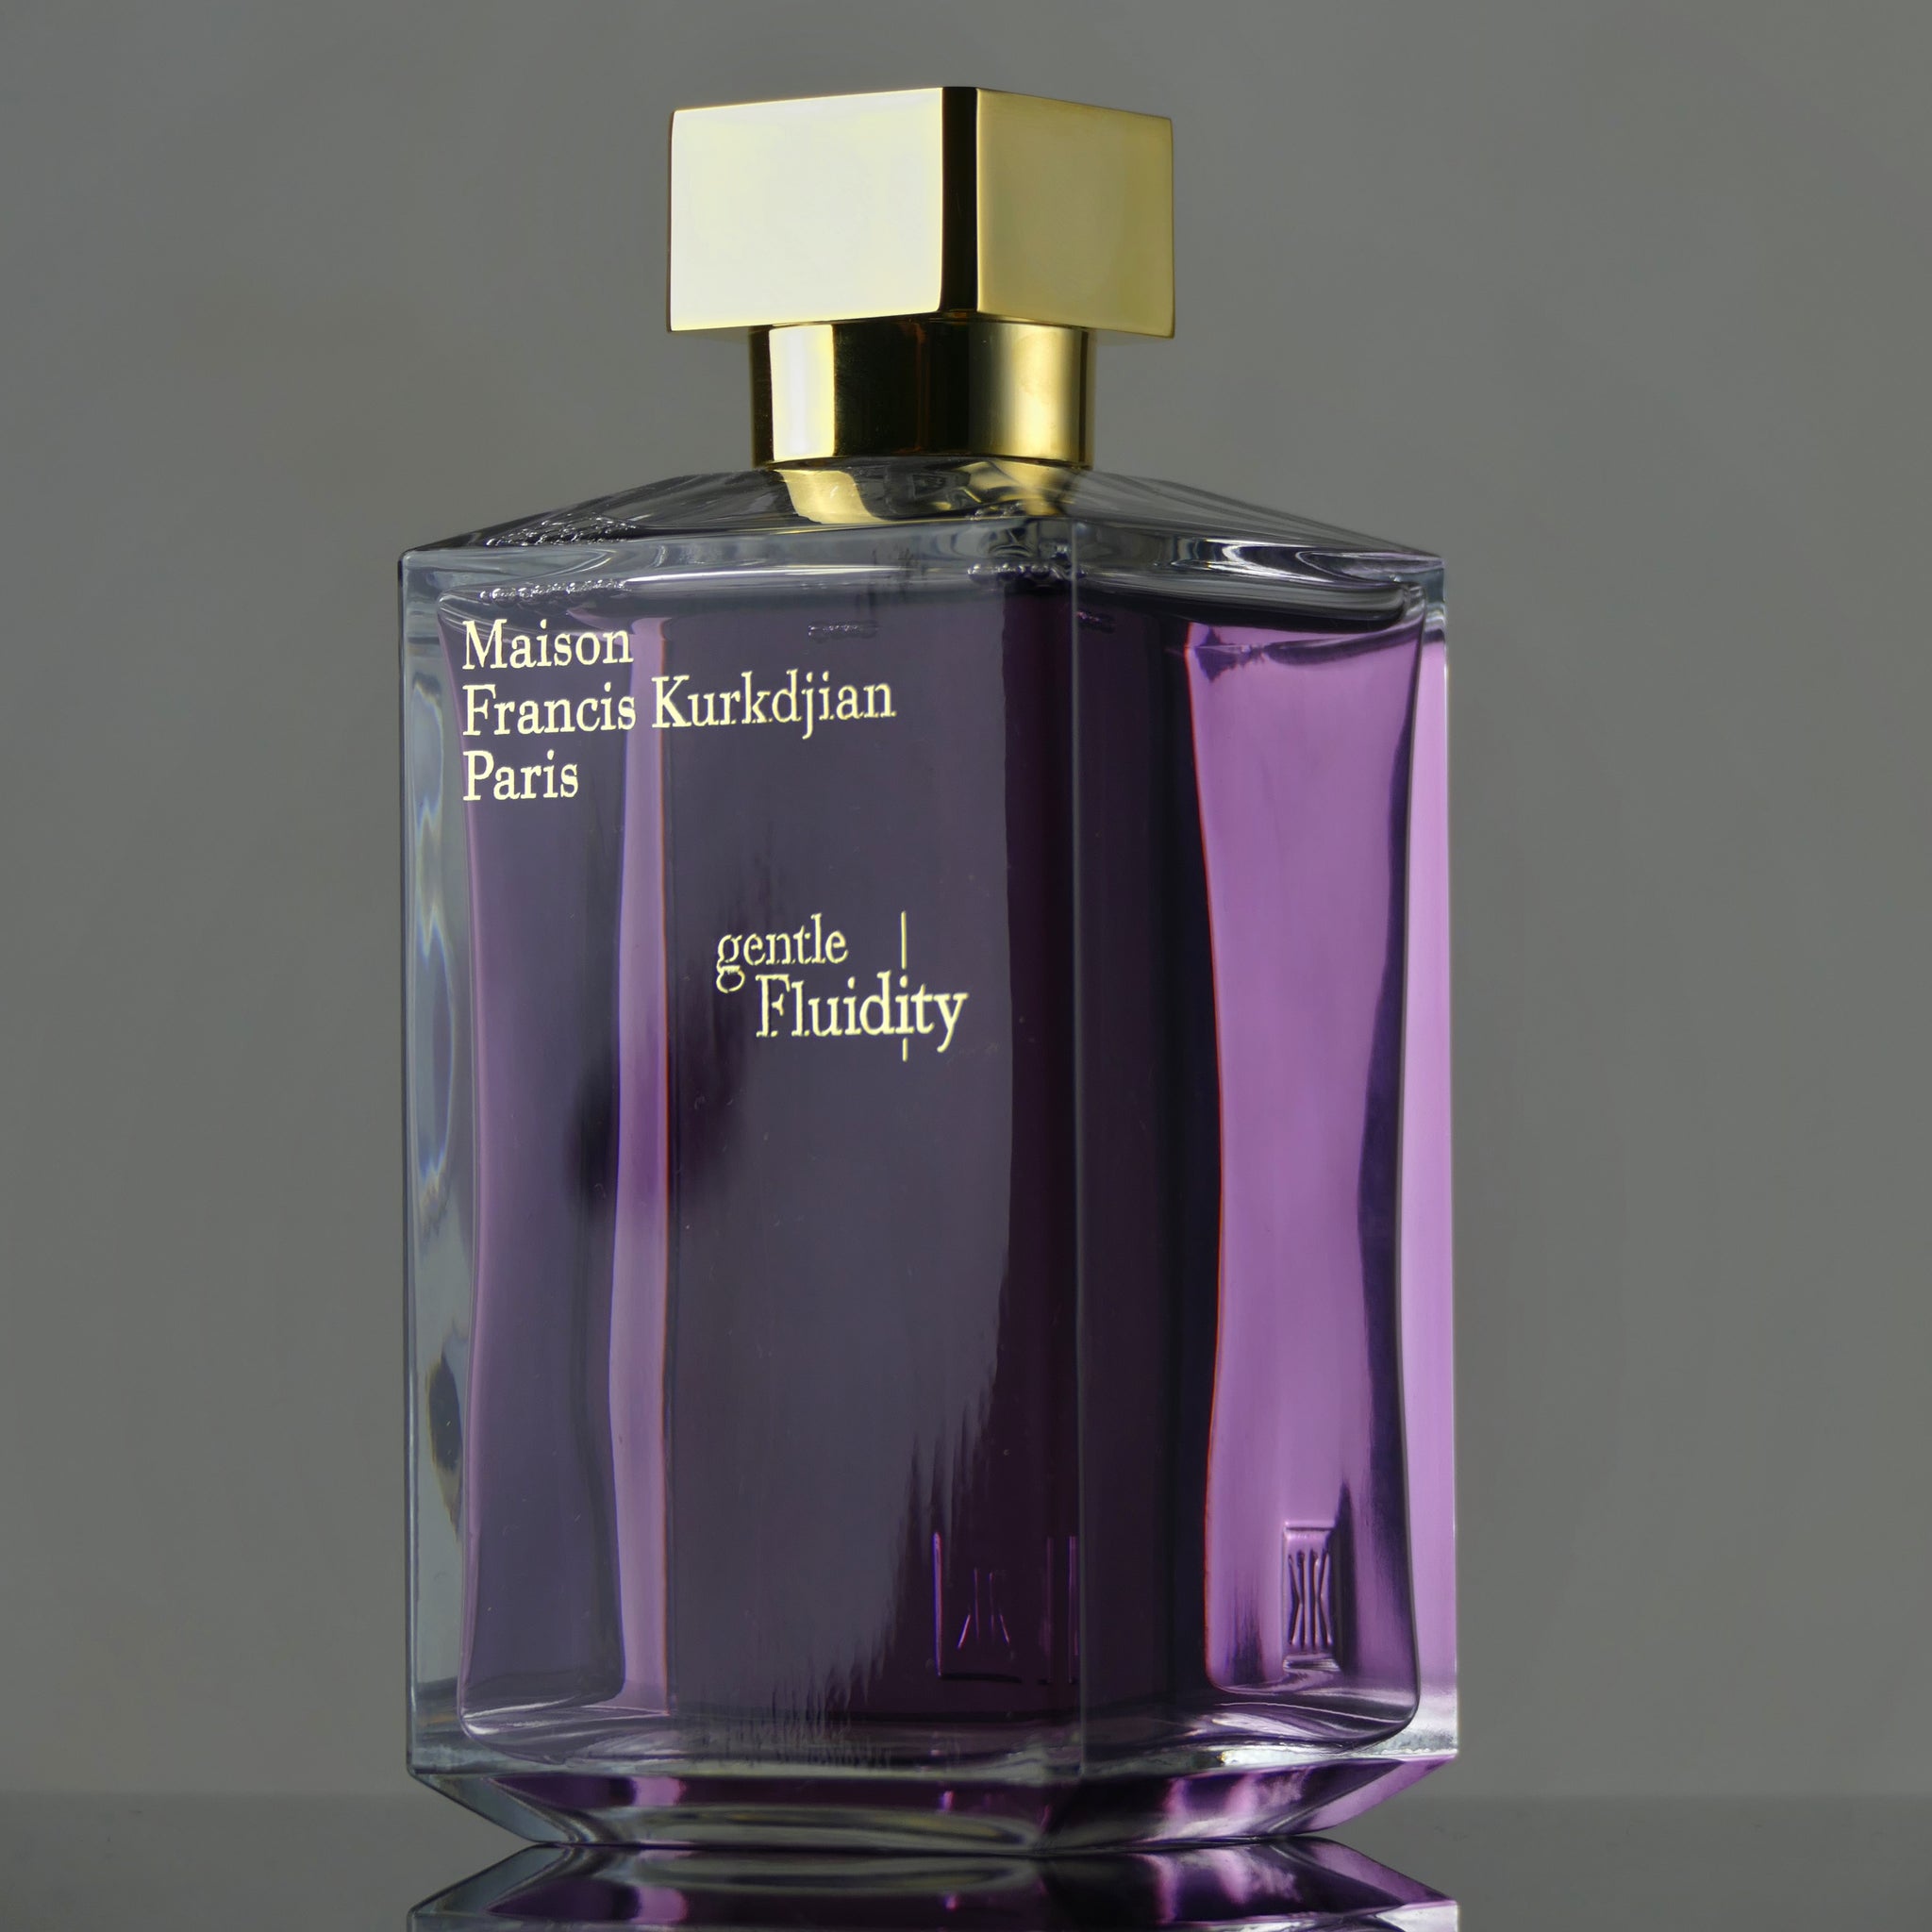 Maison Francis Kurkdjian - Gentle Fluidity Gold - Fragrance Samples